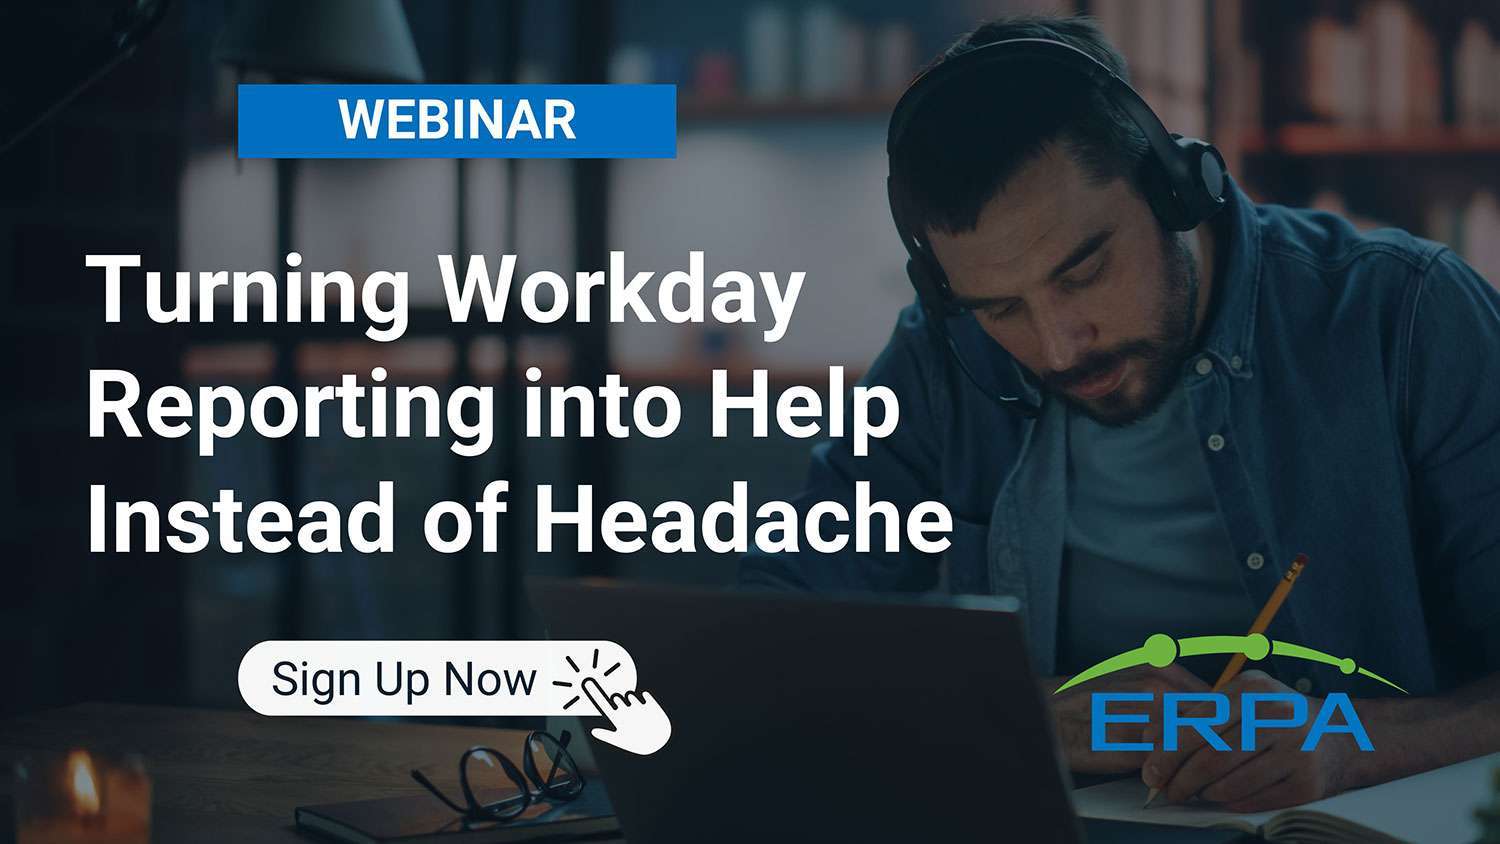 ERPA Webinar: Turning Workday Reporting Into Help Instead of Headache